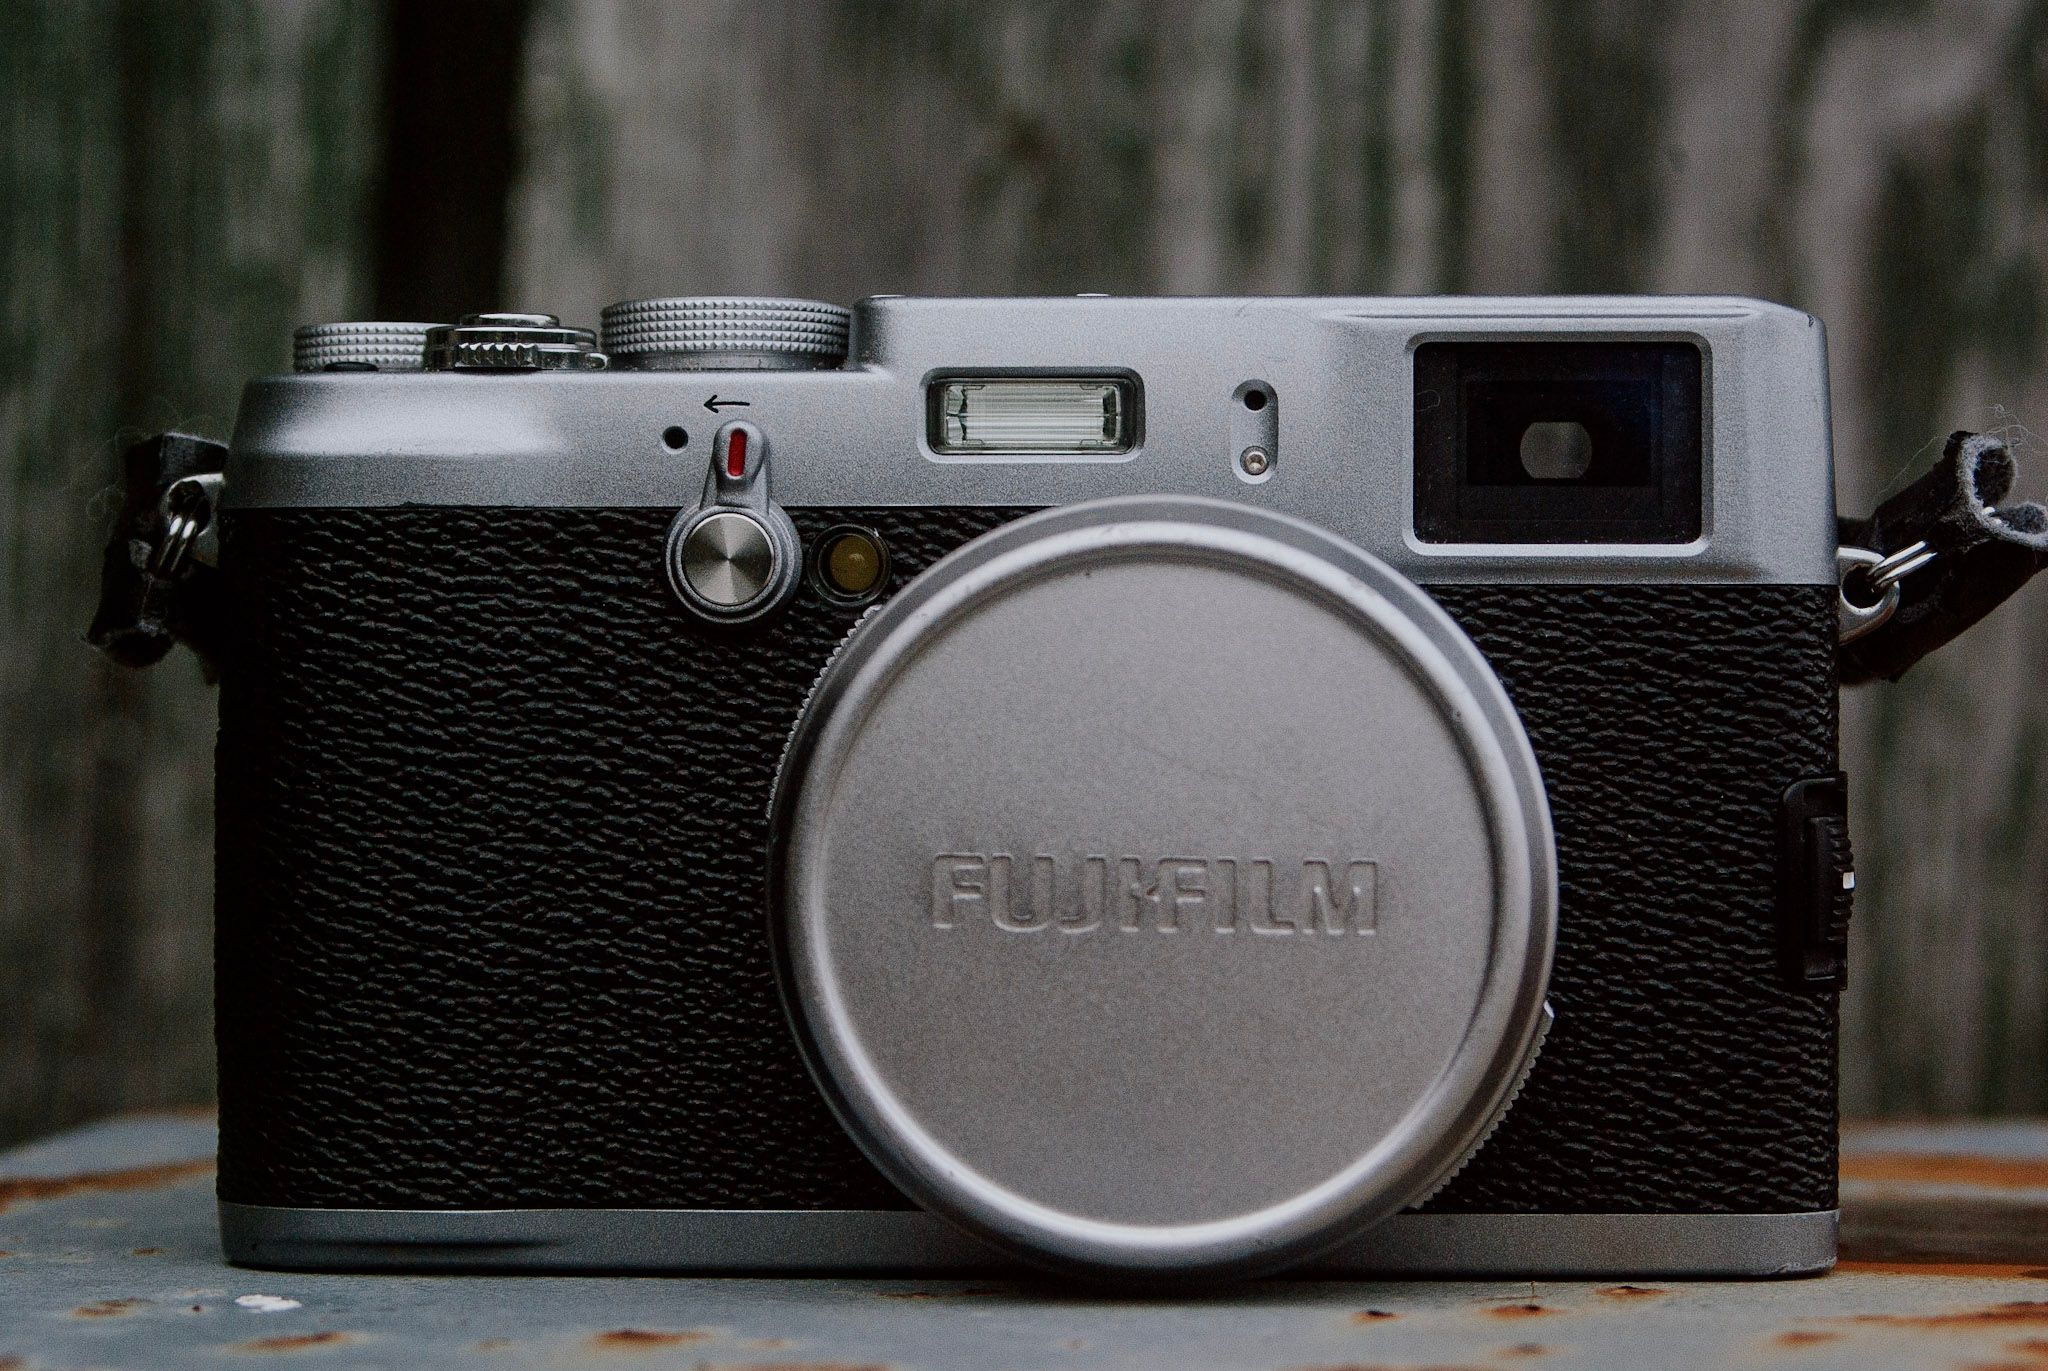 Fujifilm FinePix X100 Digital Camera Review